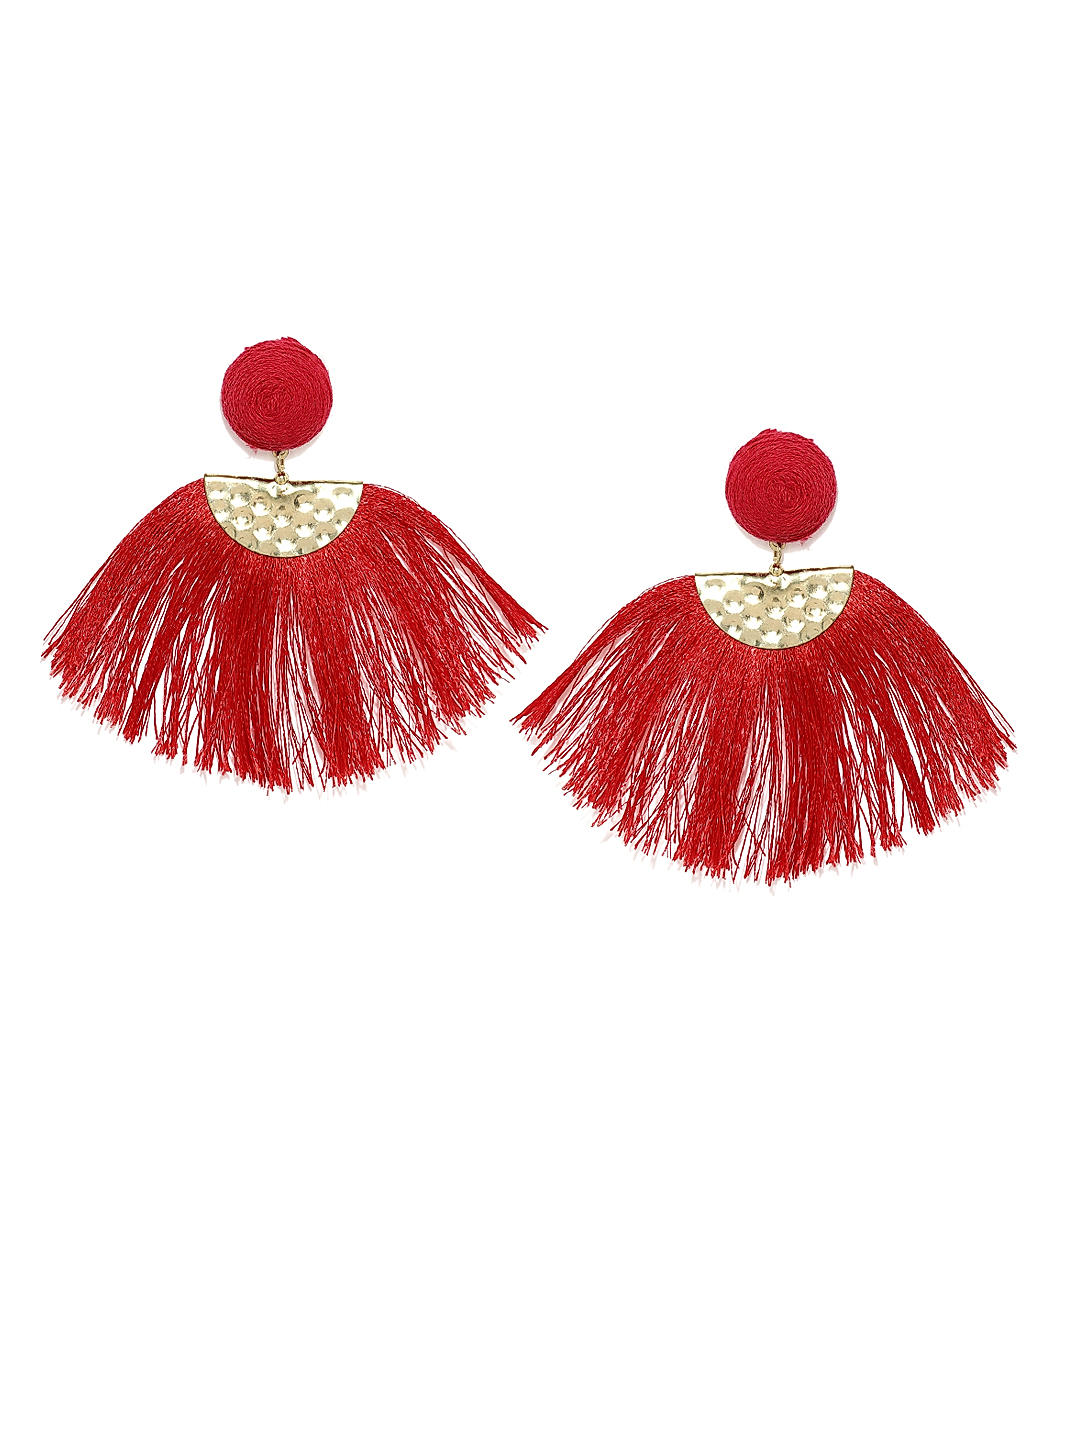 Wood earrings, w/pom pom, lightweight, black, cream, red | eBay